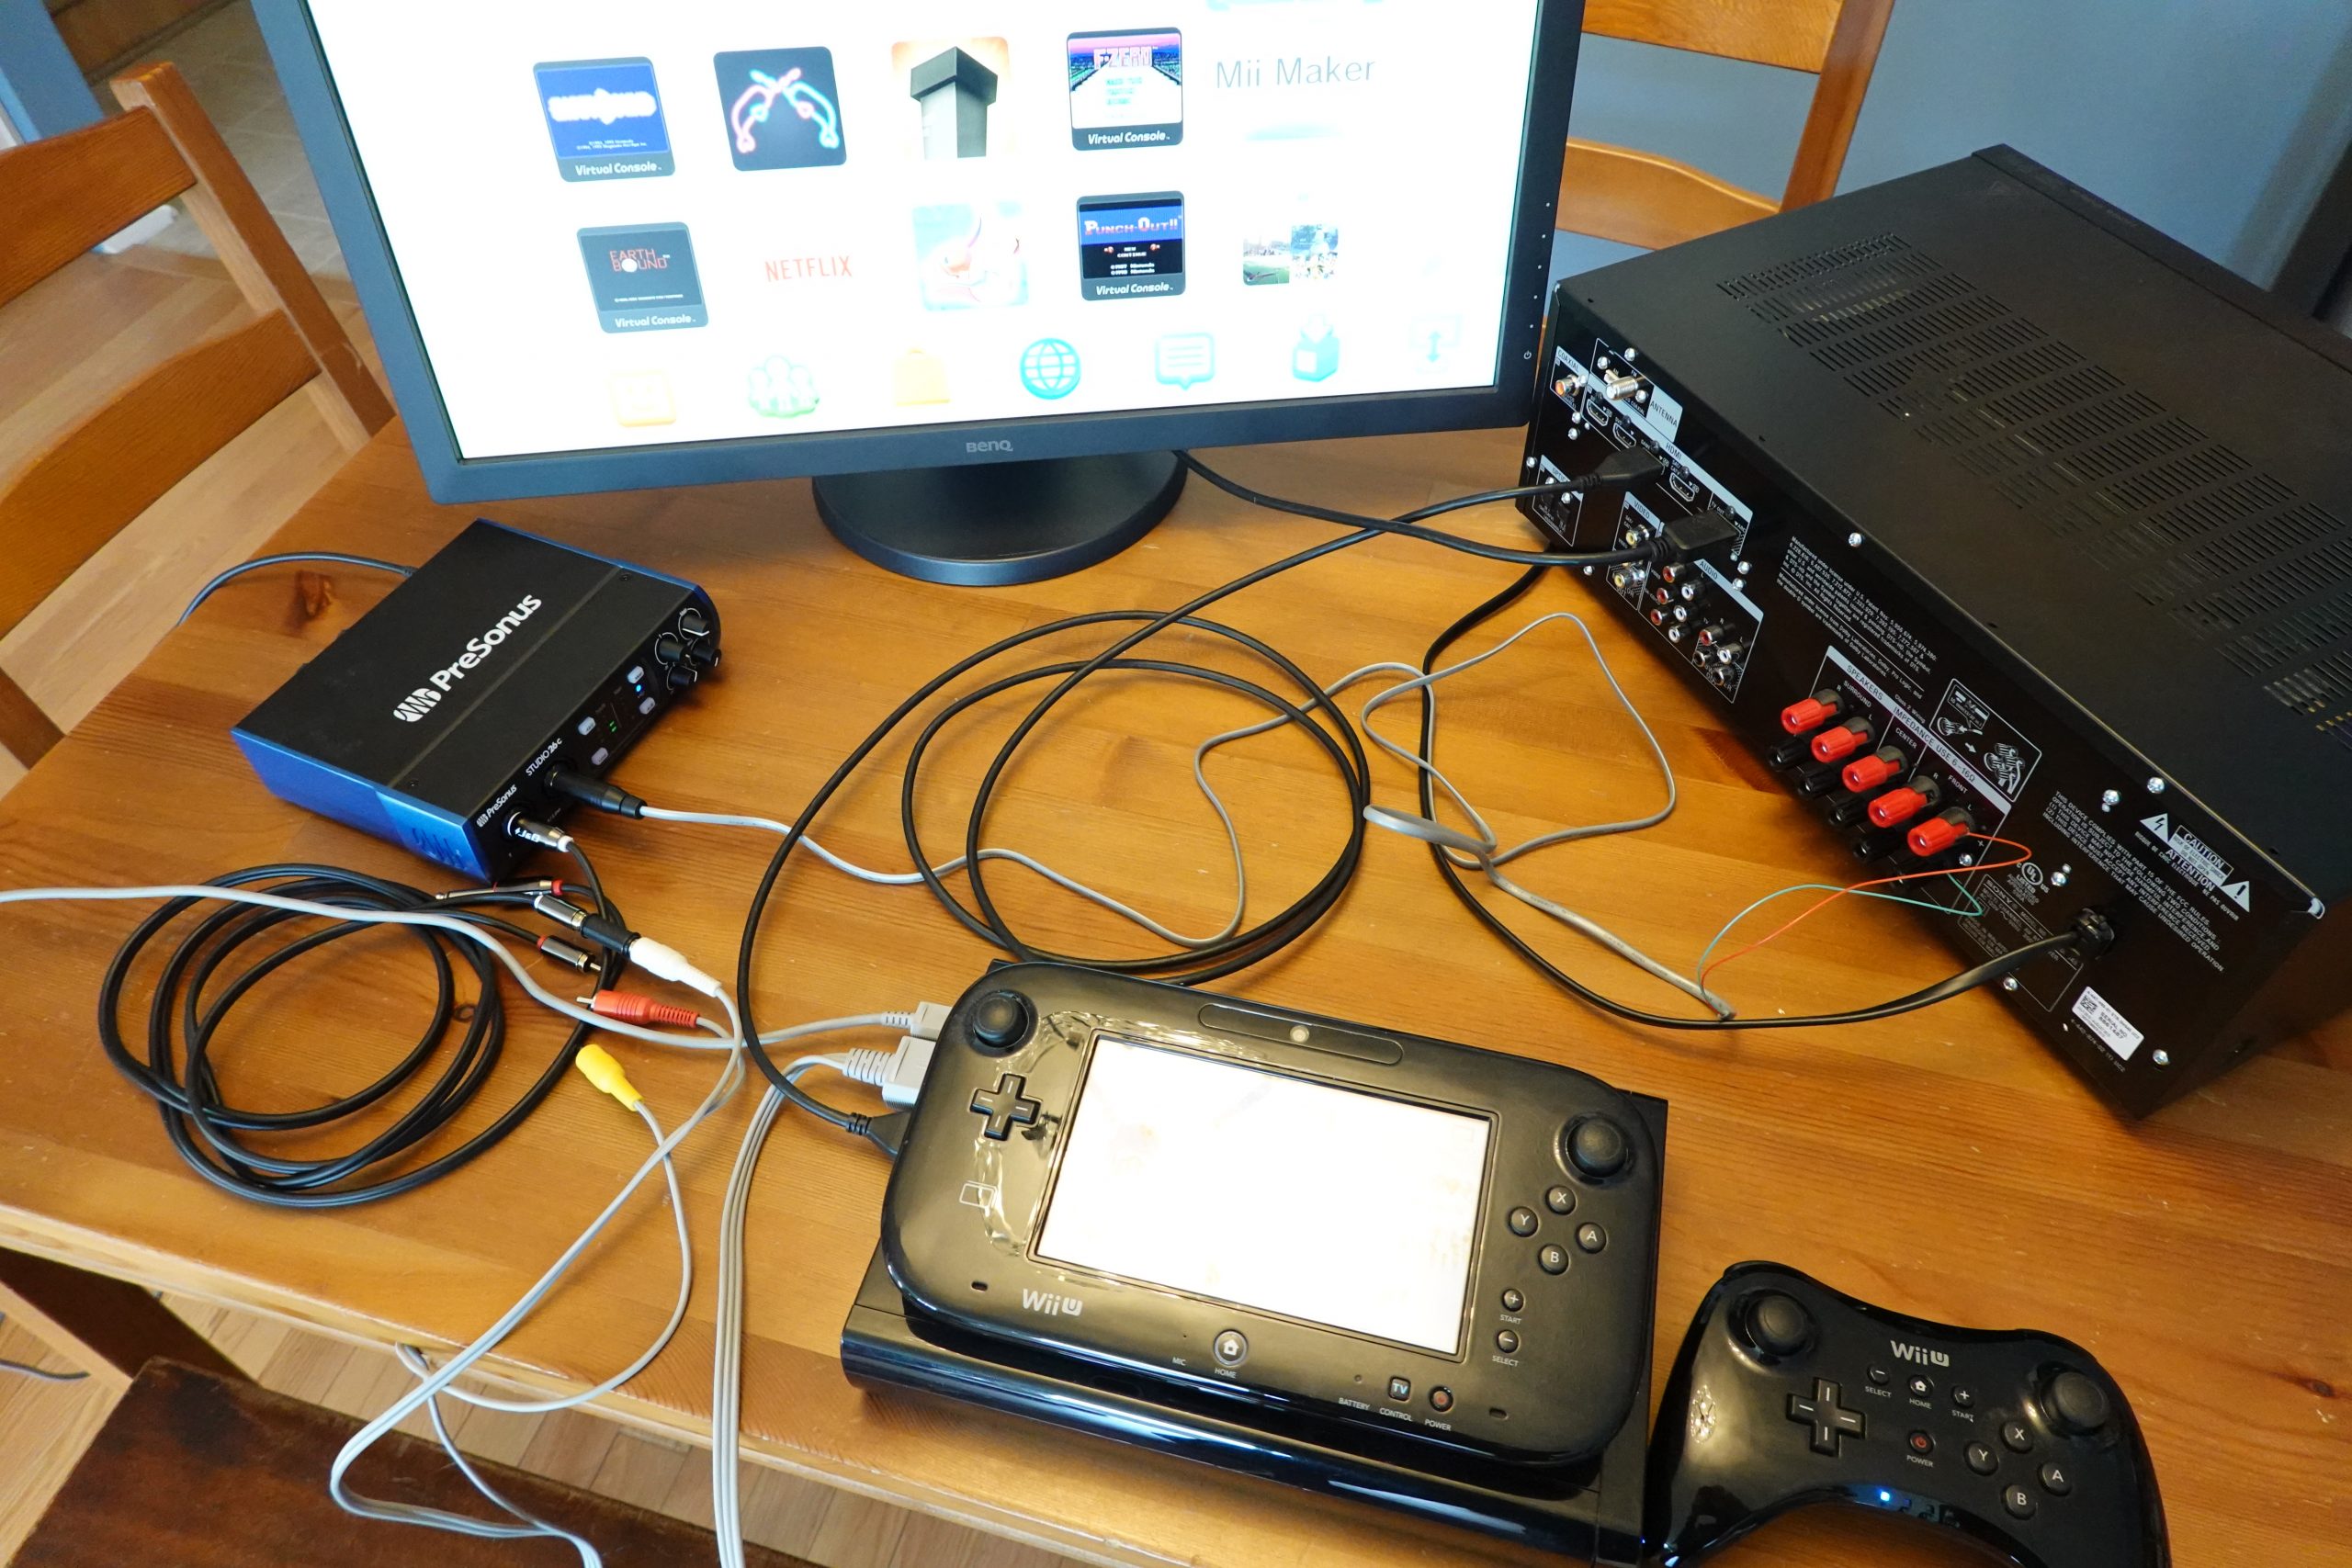 Using a Nintendo Wii U to measure HDMI audio latency